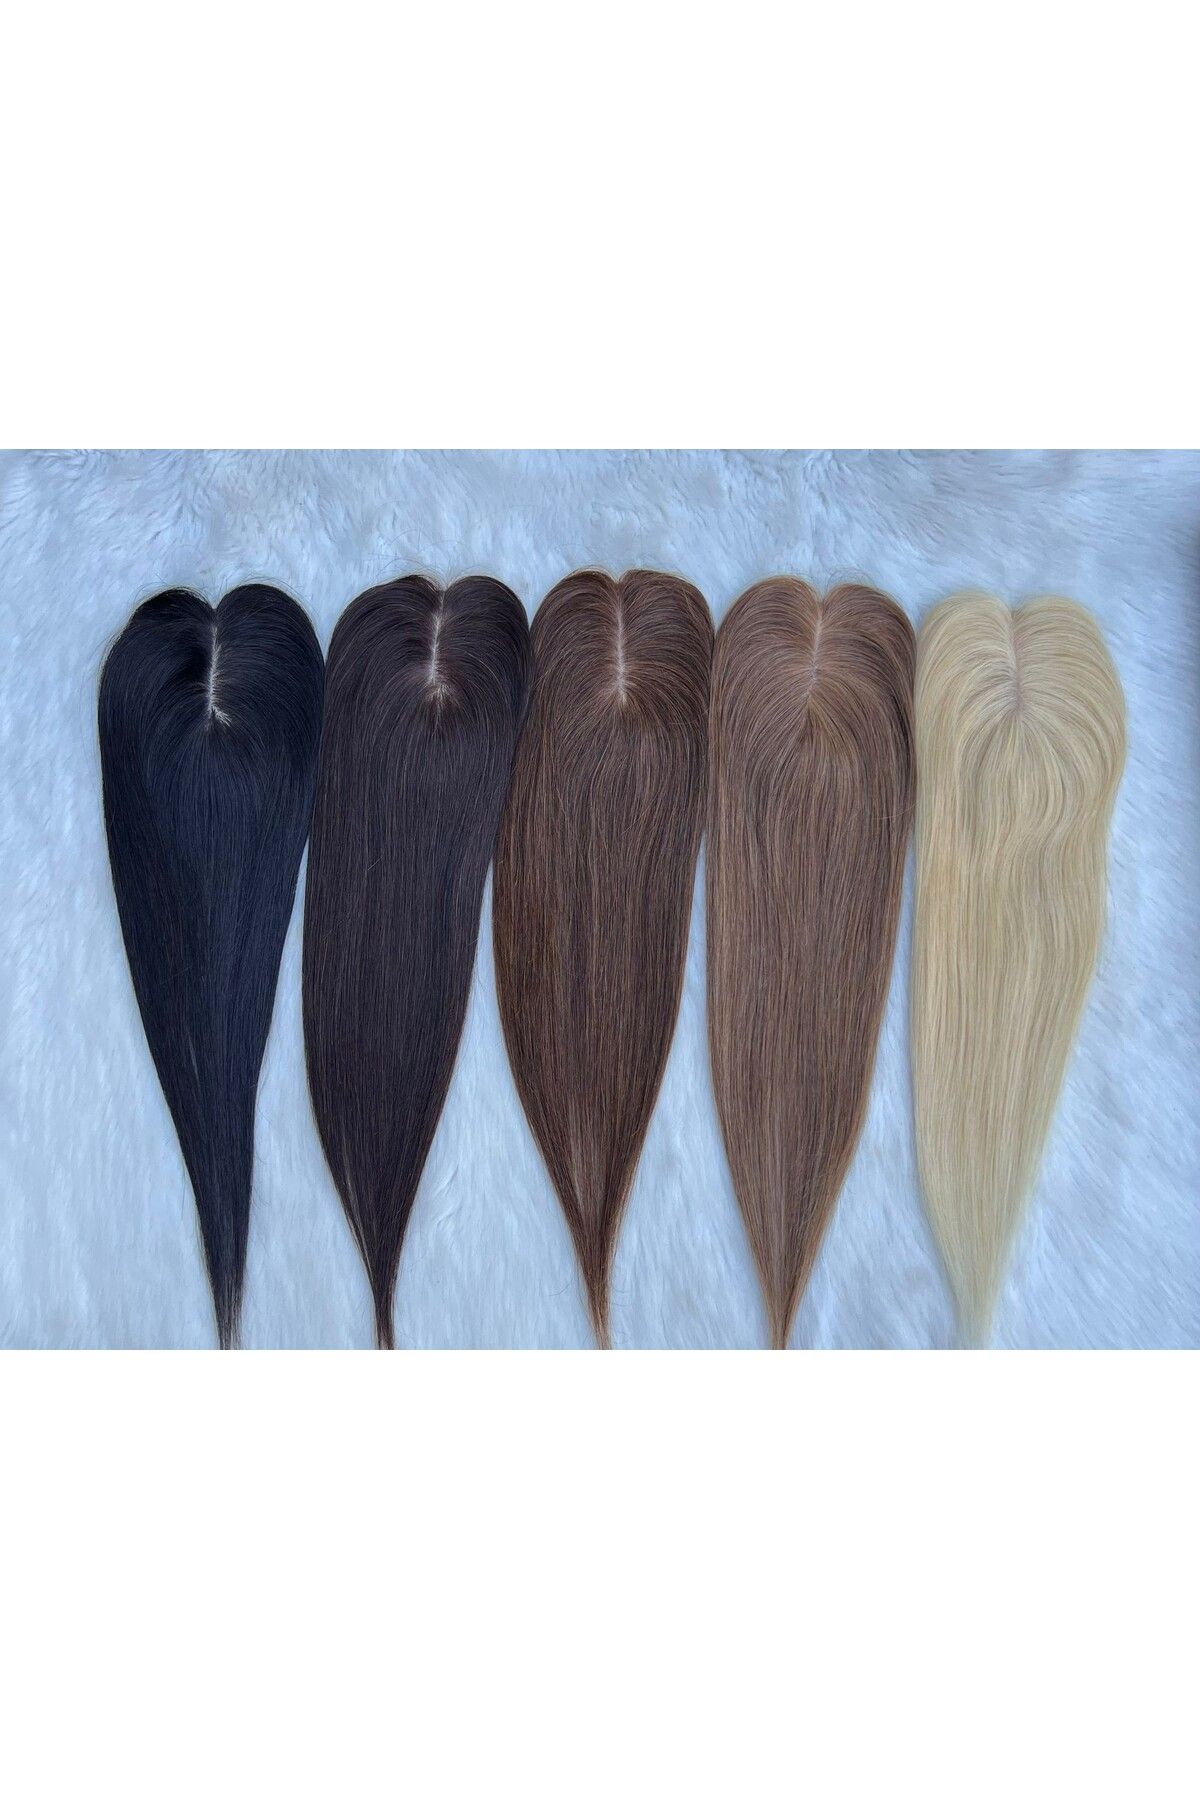 SILA Gerçek Saç Tül Tepelik - Perçem - Kahkül -Açık  Karamel Renk